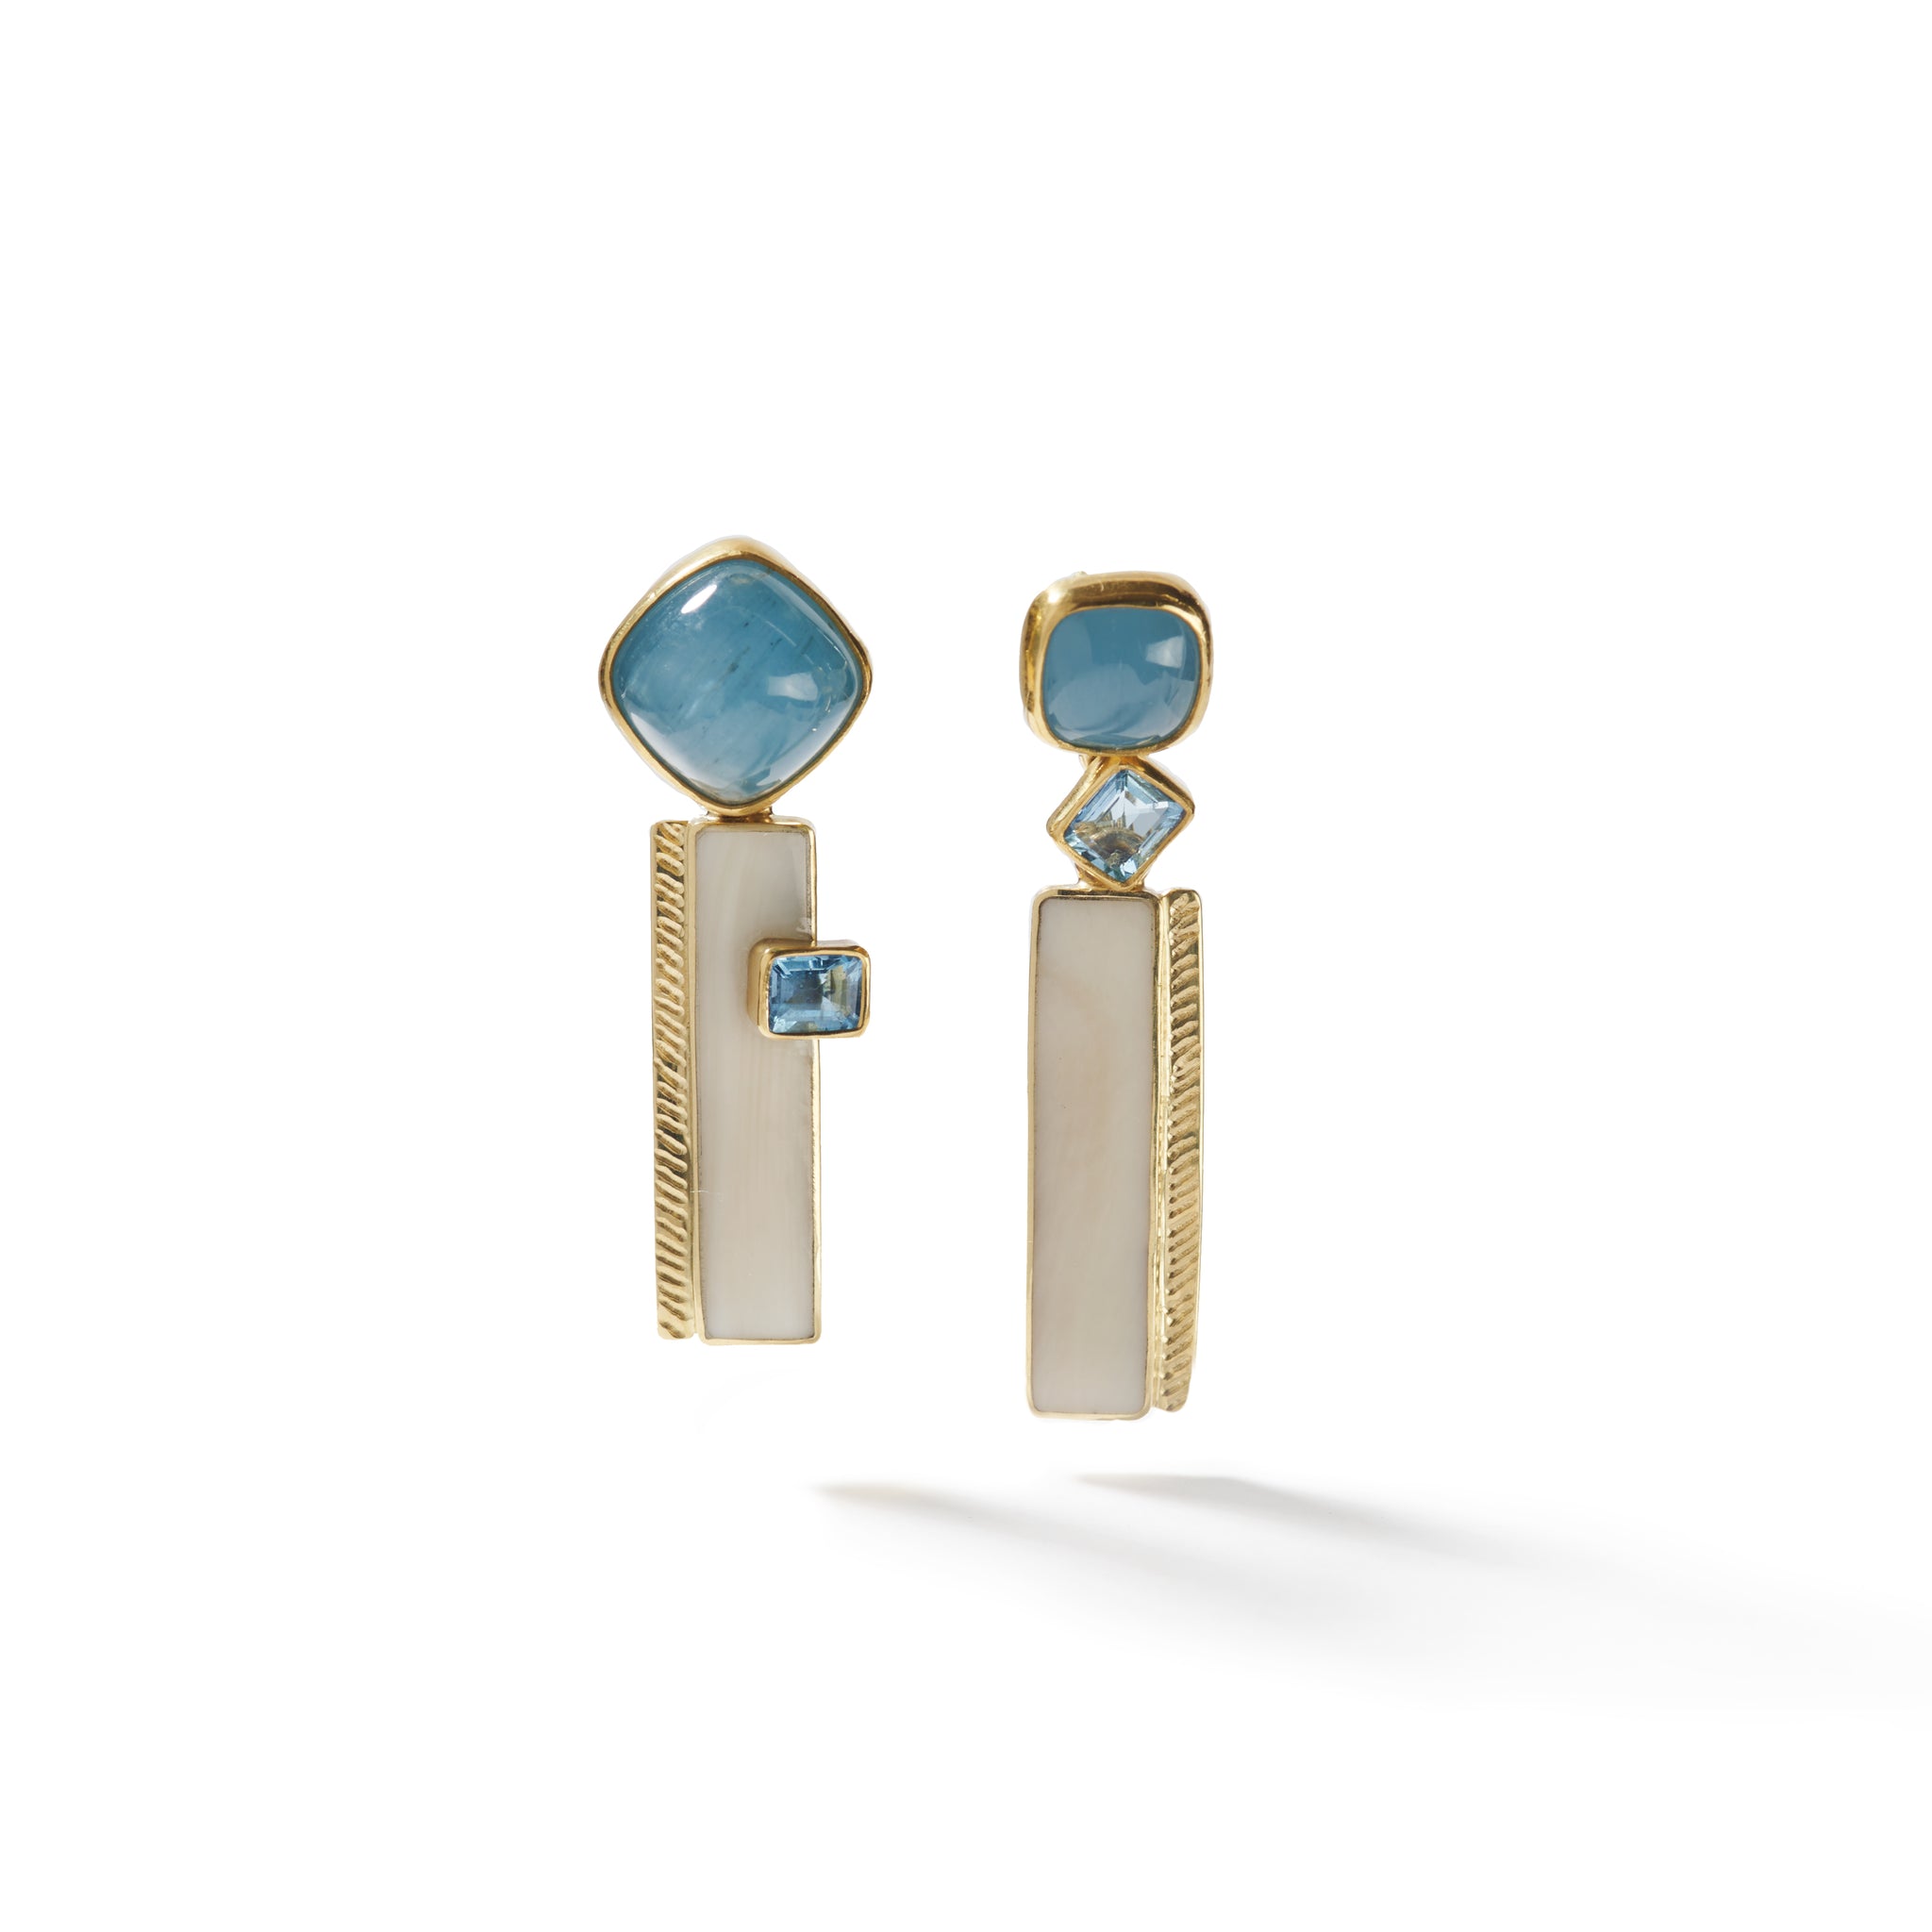 Earrings in Aquamarine